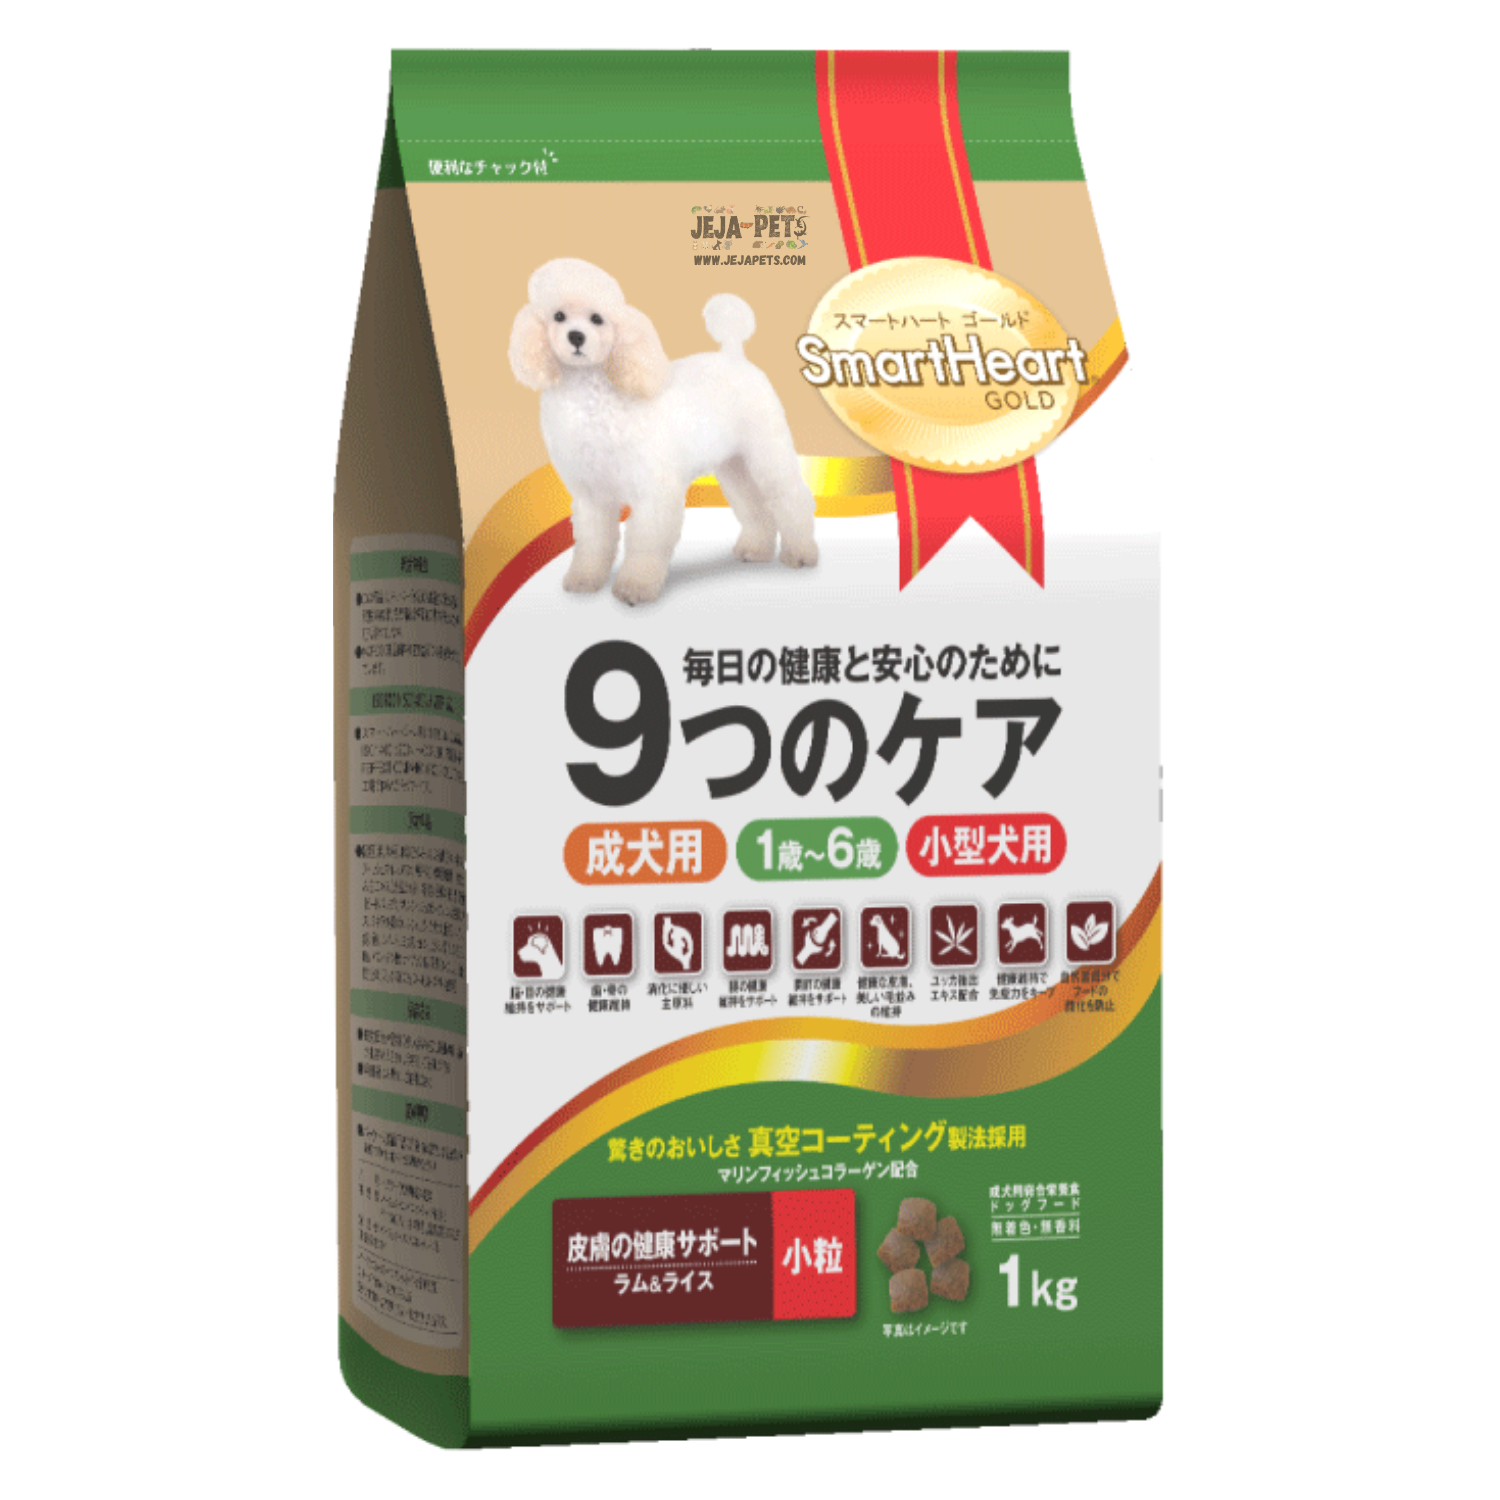 SmartHeart Gold Dry Dog Food 9cares Lamb and Rice Formula - 1kg